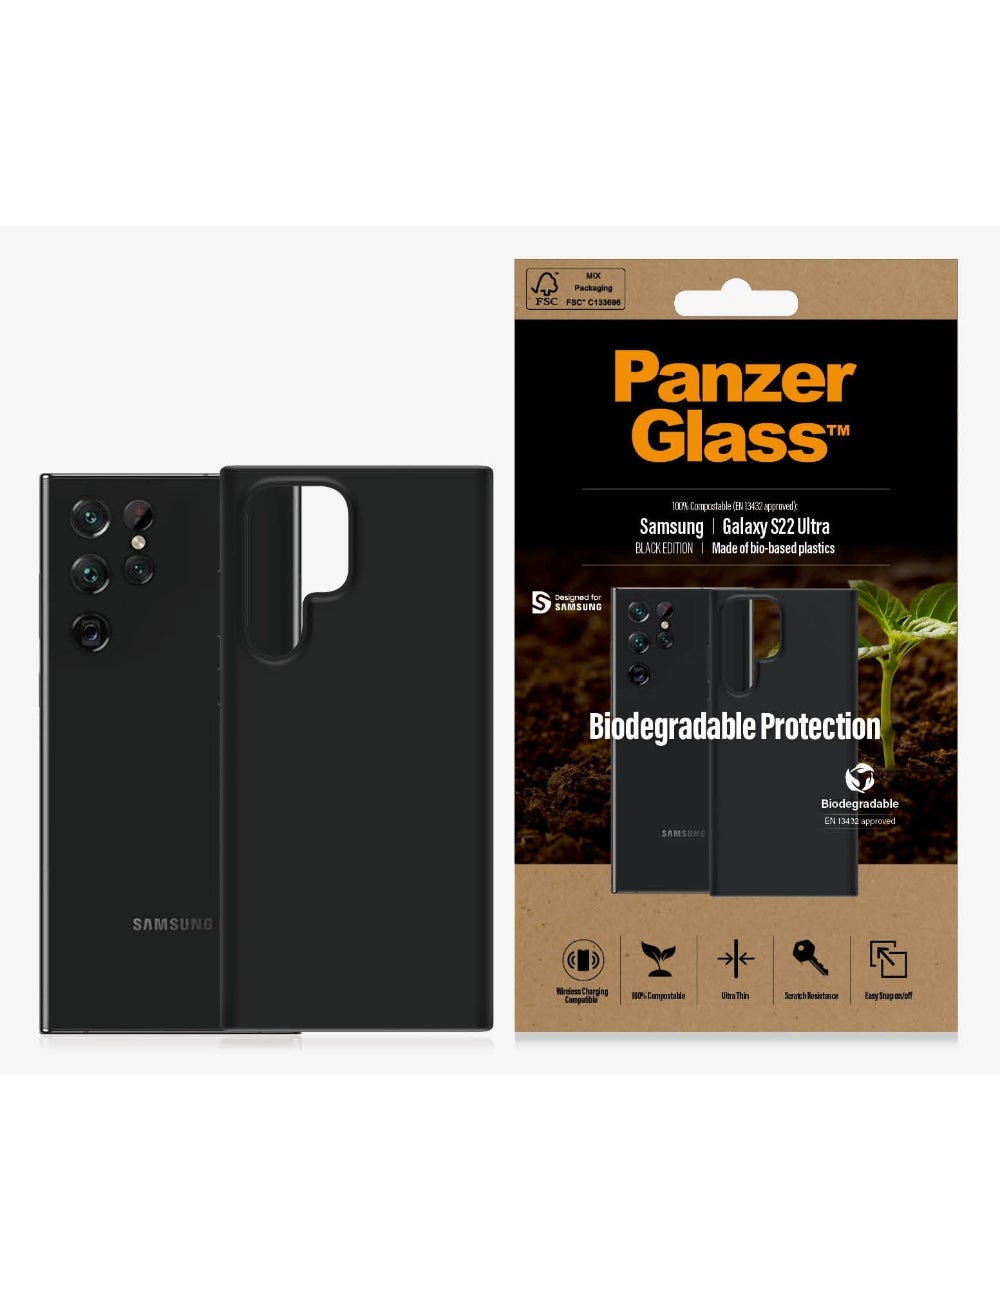 PanzerGlass™ Samsung Galaxy S22 Serie - German on Vimeo